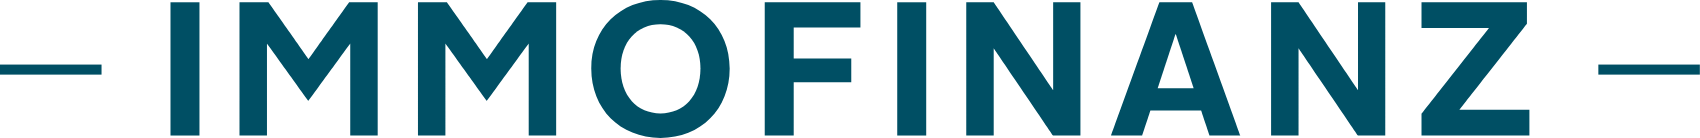 Immofinanz logo large (transparent PNG)